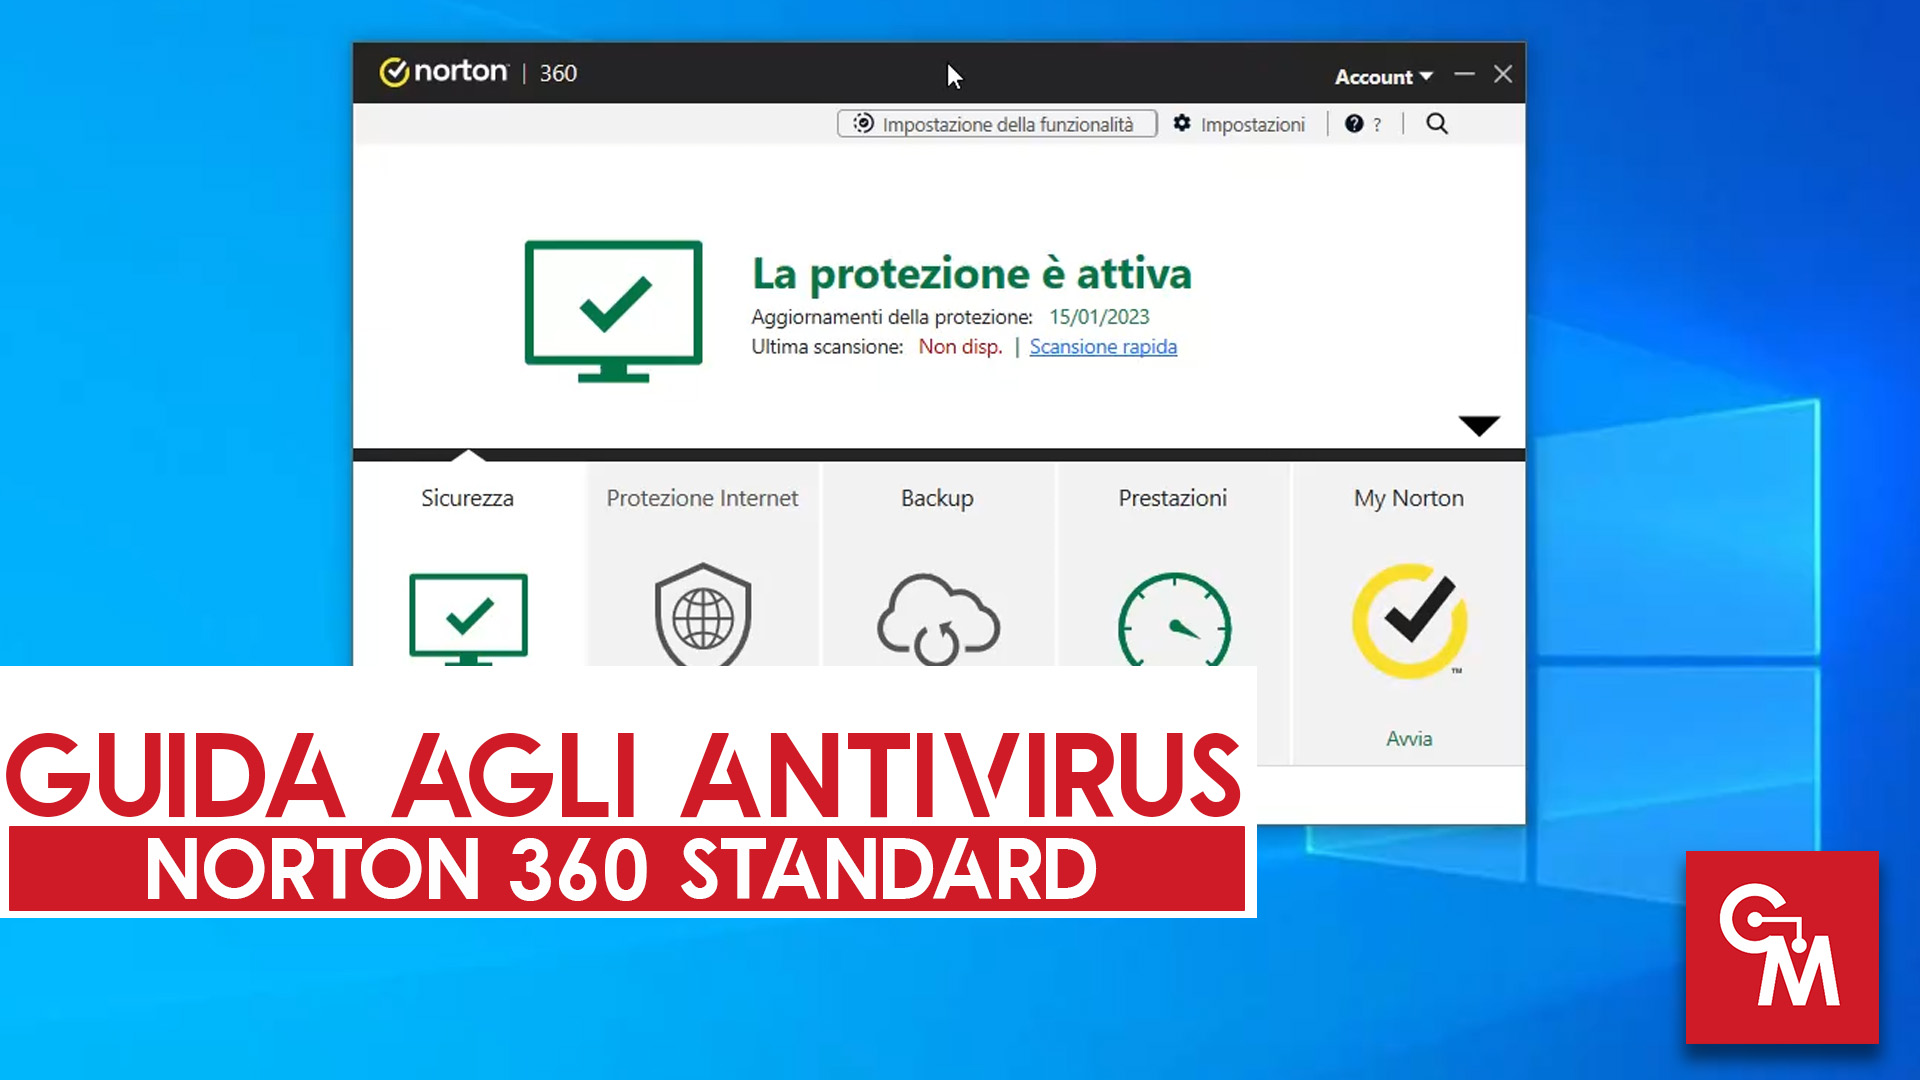 Guida agli Antivirus | Norton 360 Standard